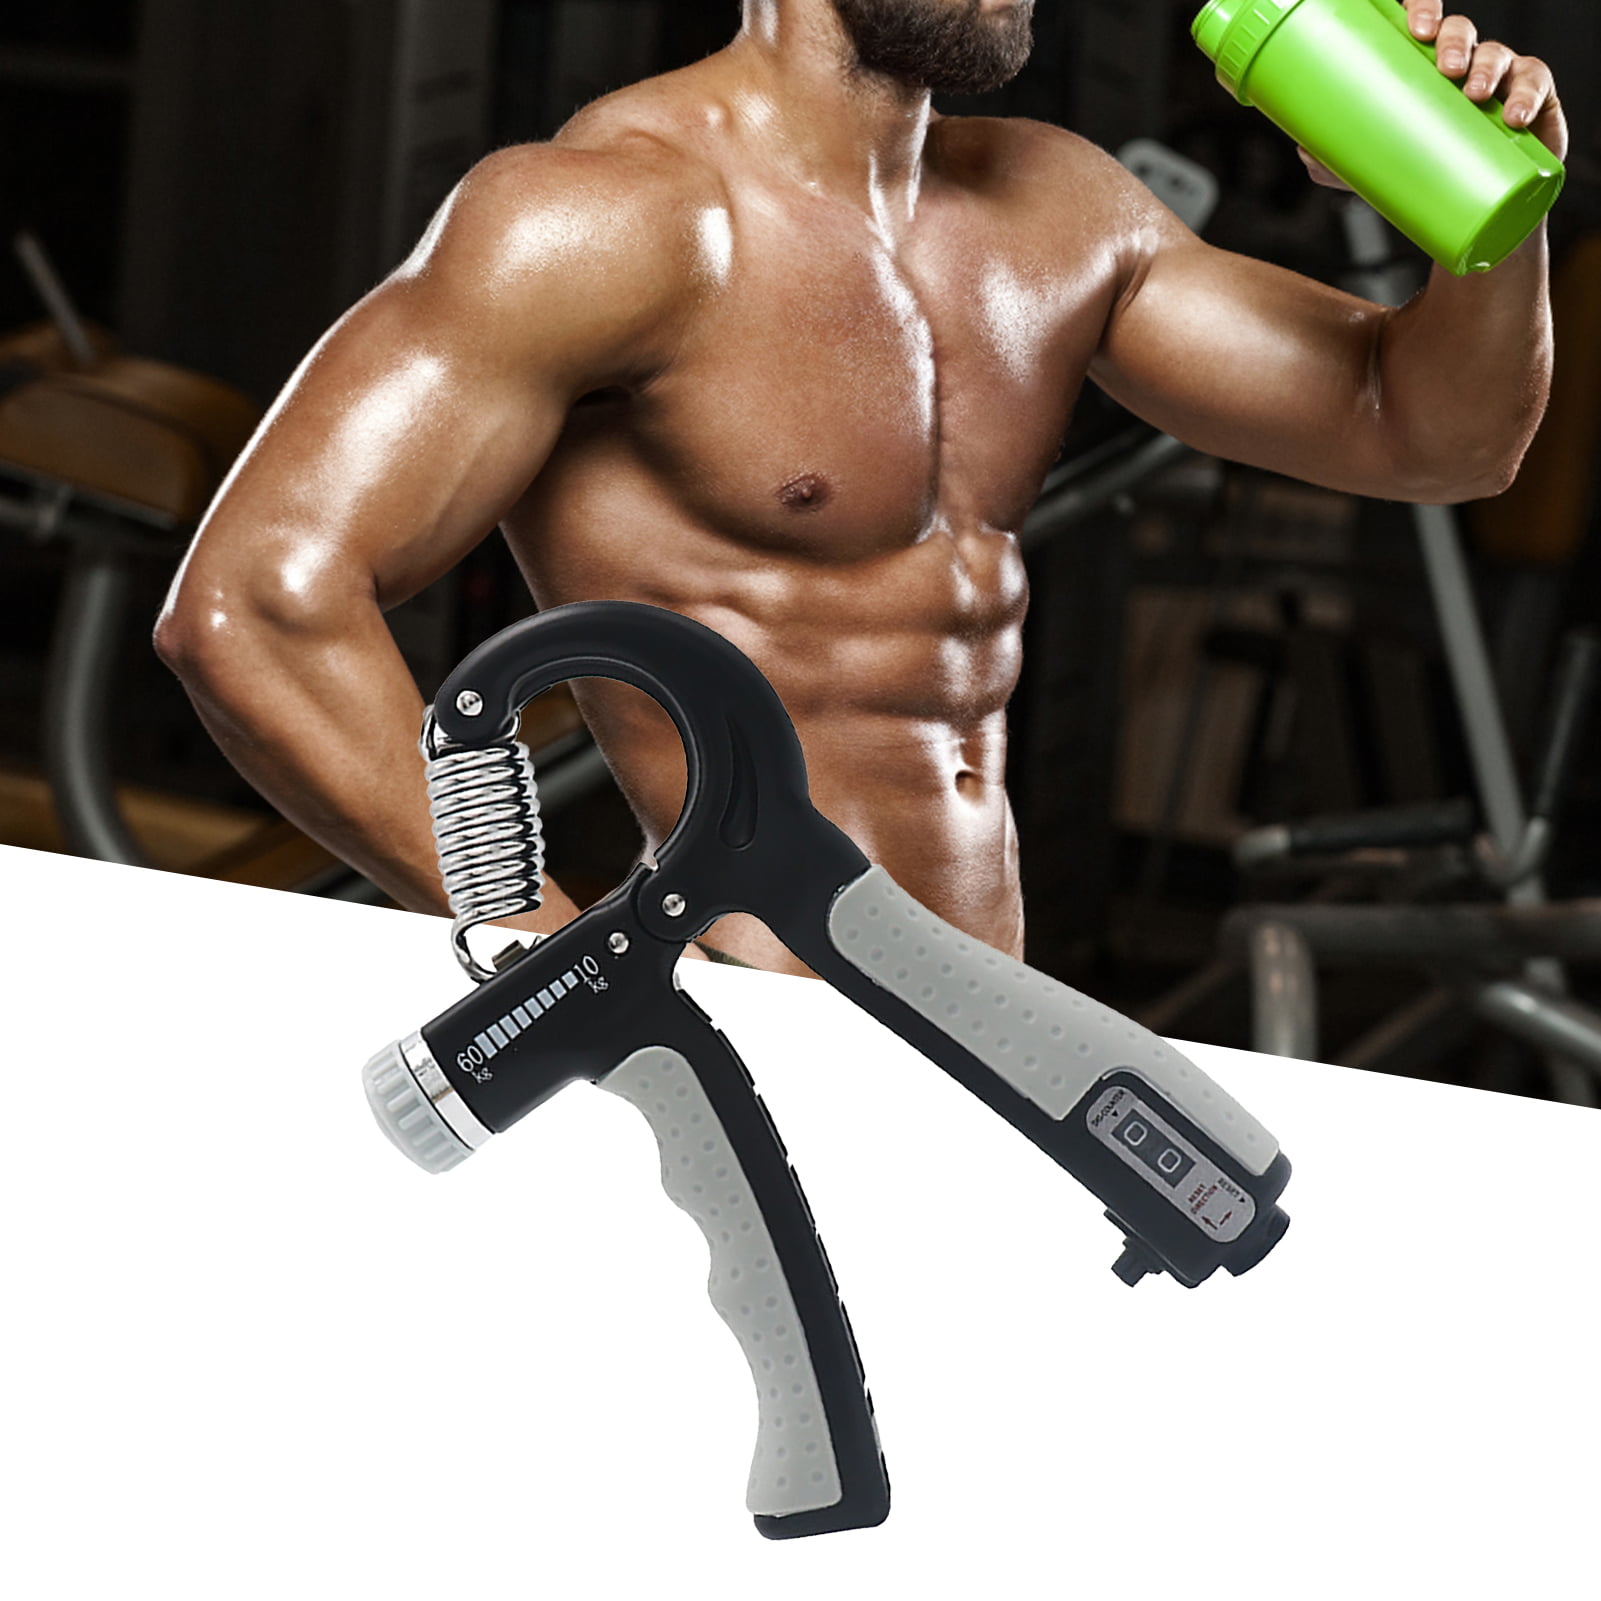 Details about   Hand Grip Strength Power Trainer Gripper Strengthener Adjustable Gym Exerciser 